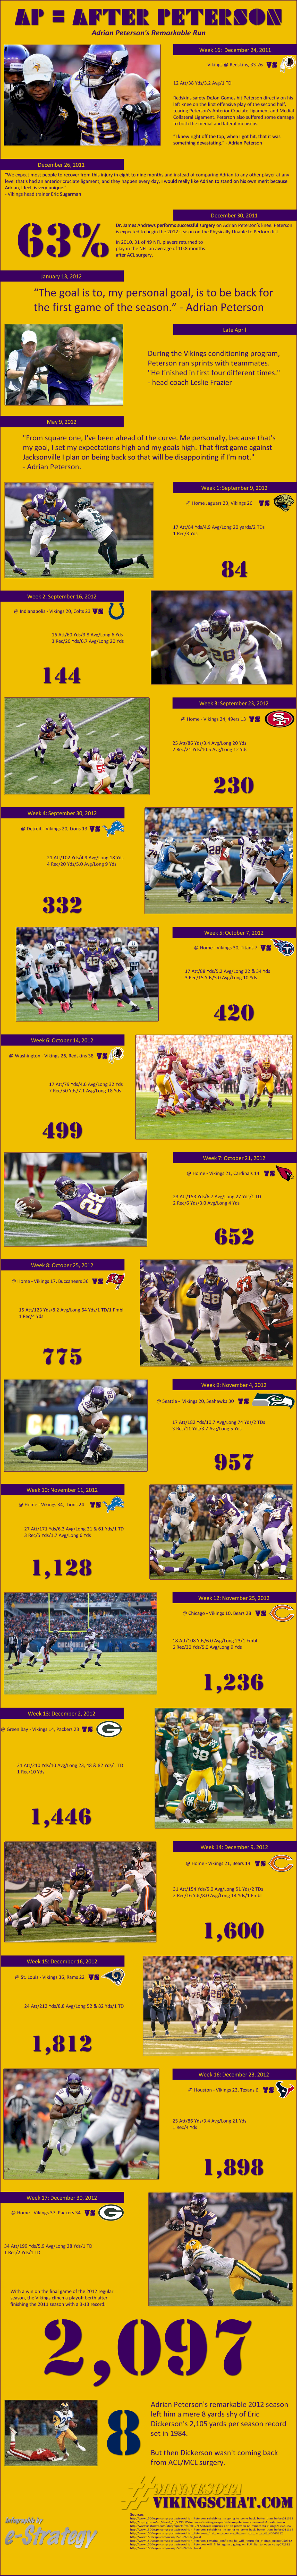 Infographic - Adrian Peterson's 2012 Season